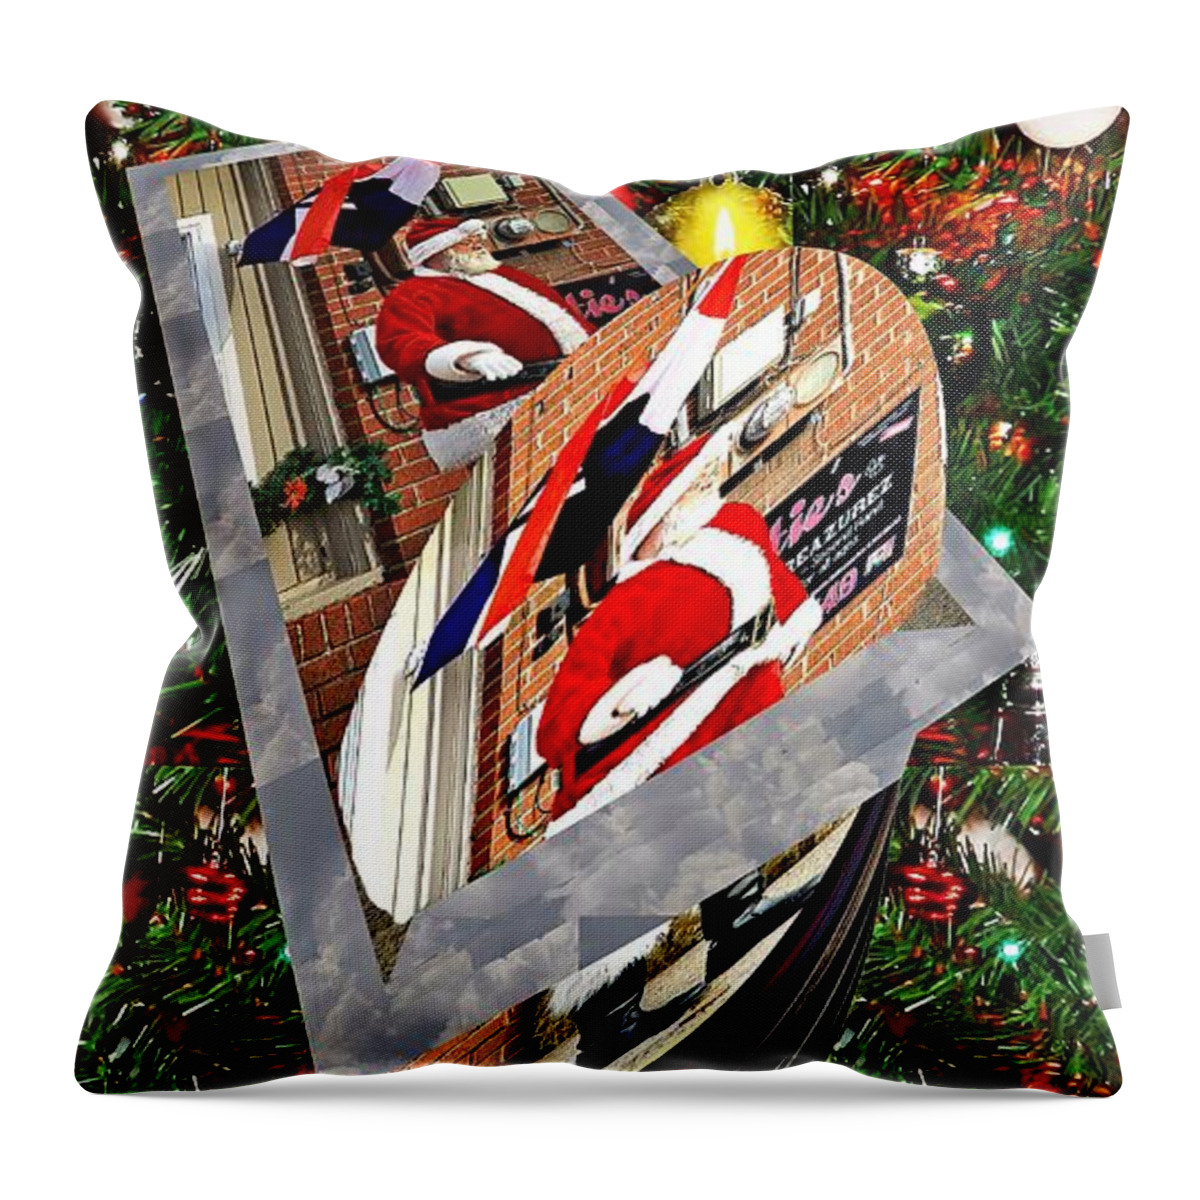 Santa Throw Pillow featuring the digital art Santa as art by Karl Rose